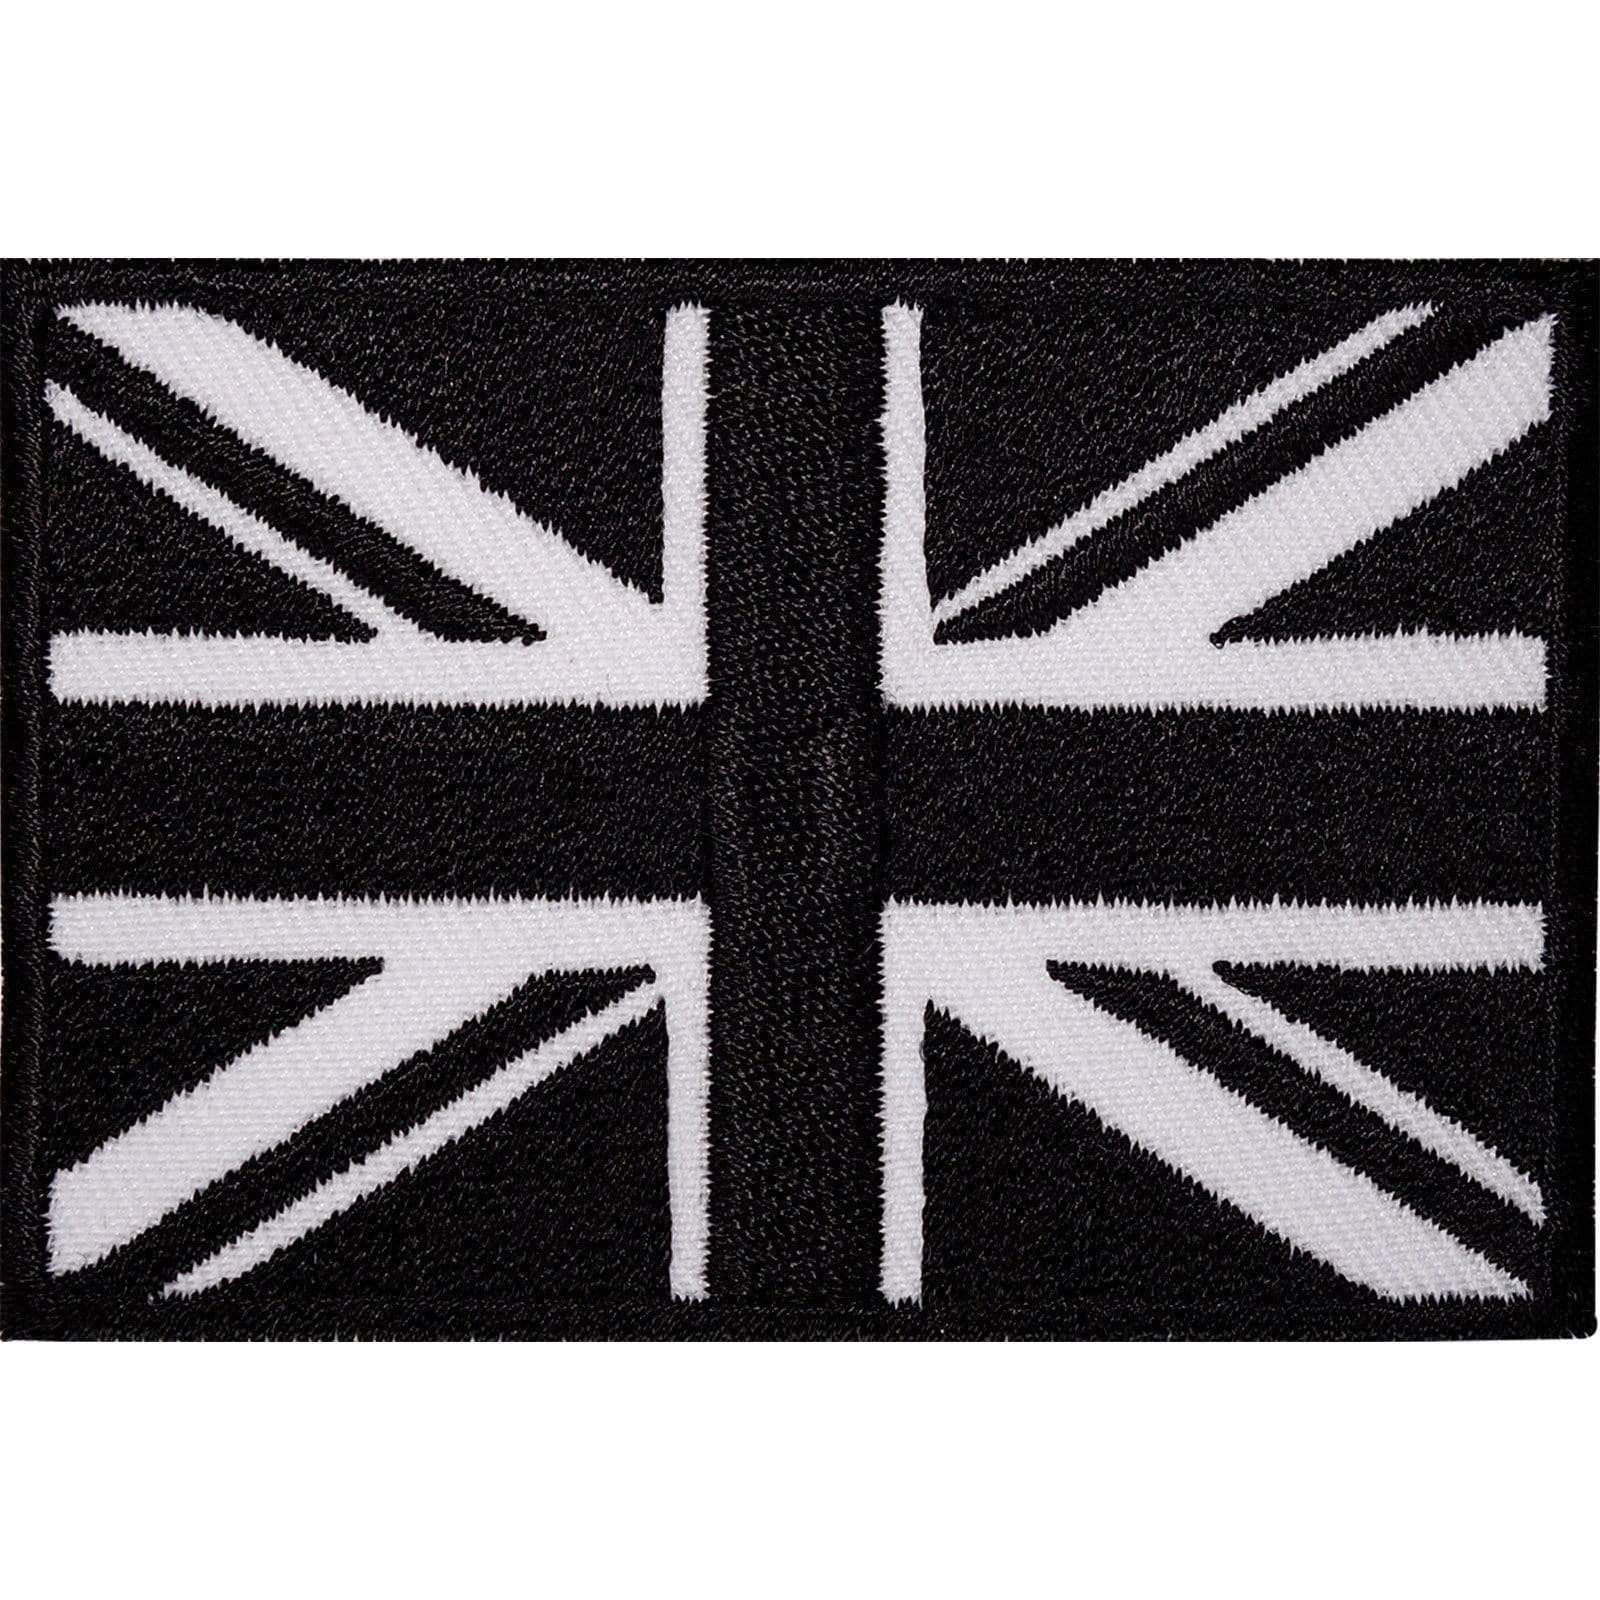 Embroidered Iron On Black UK Flag Patch Sew On Union Jack British Badge Applique